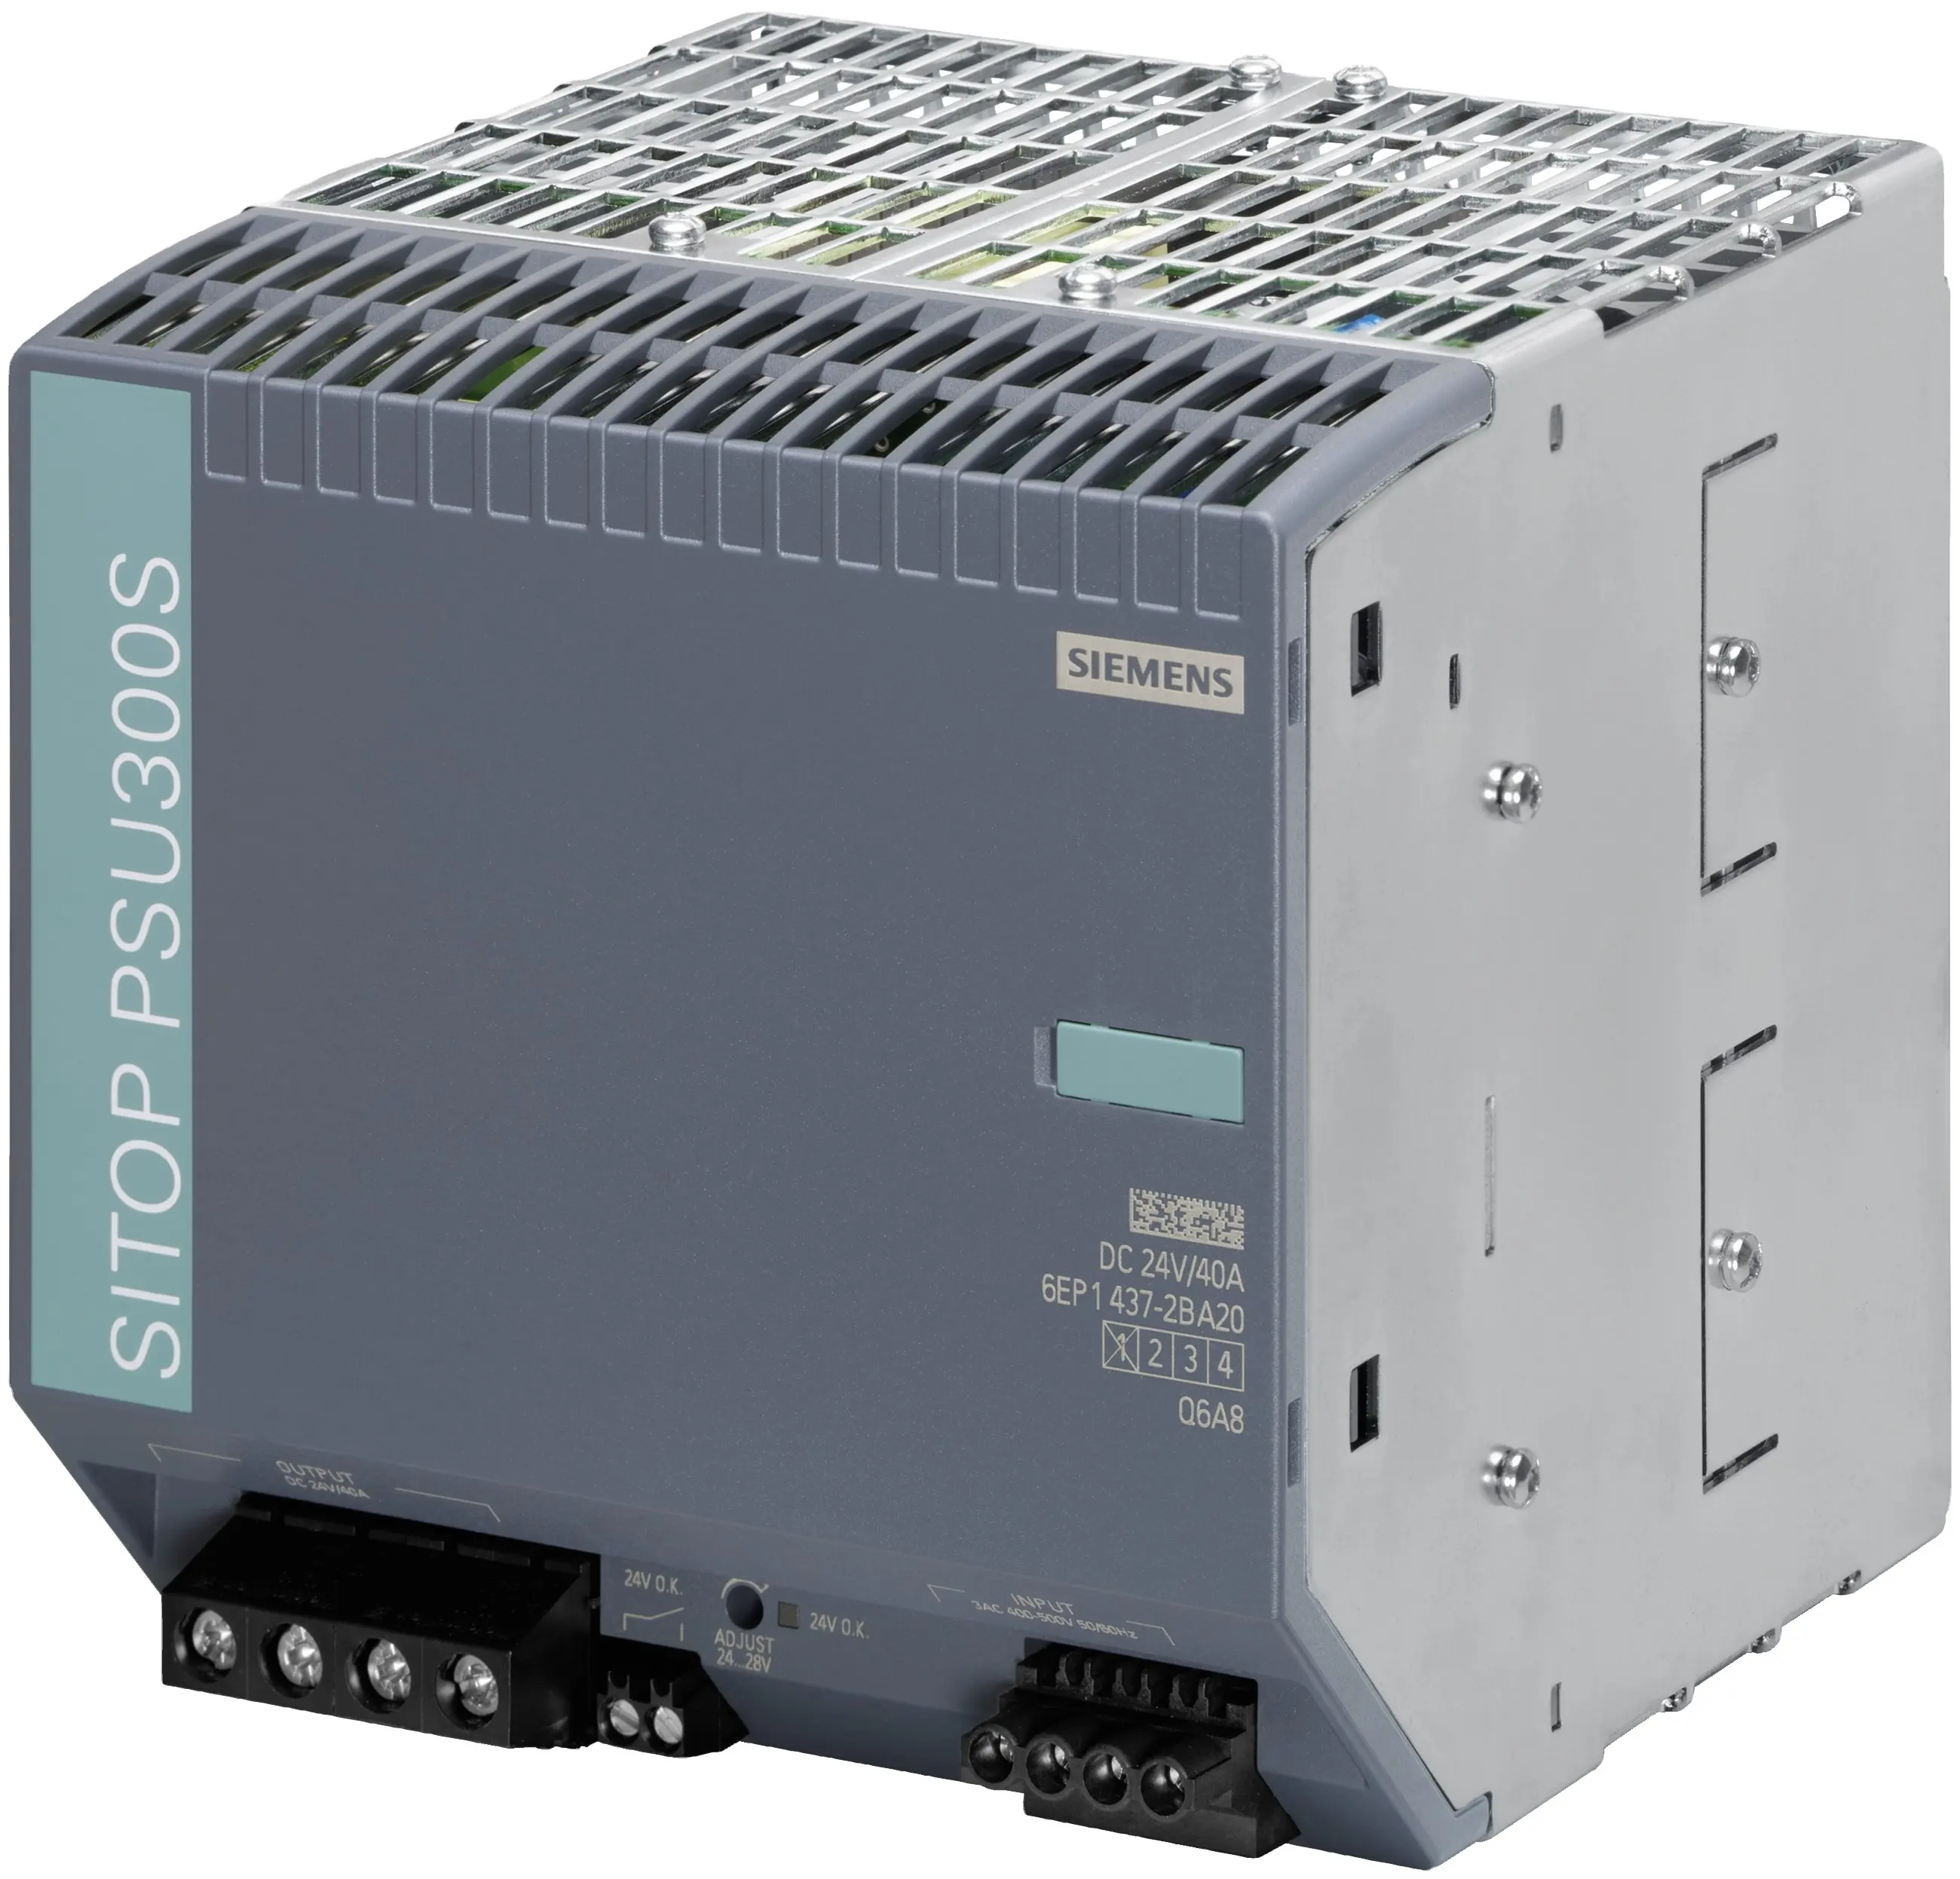 SITOP PSU300S 40 A安定化電源入力400-500V3AC出力24VDC/40 A承認なし